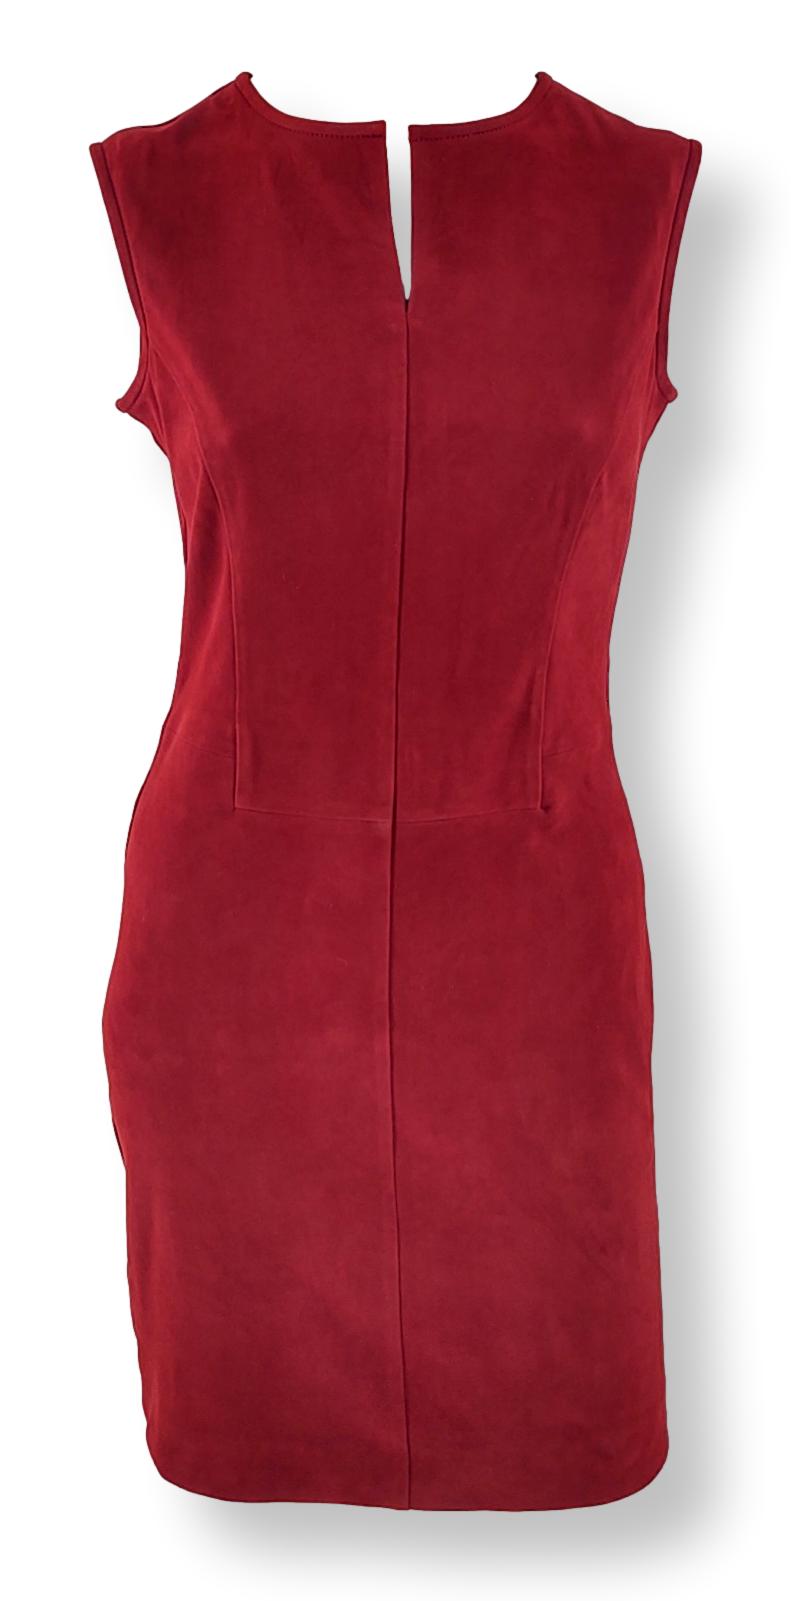 Eglantine Dress - Goat Suede - Women - Red